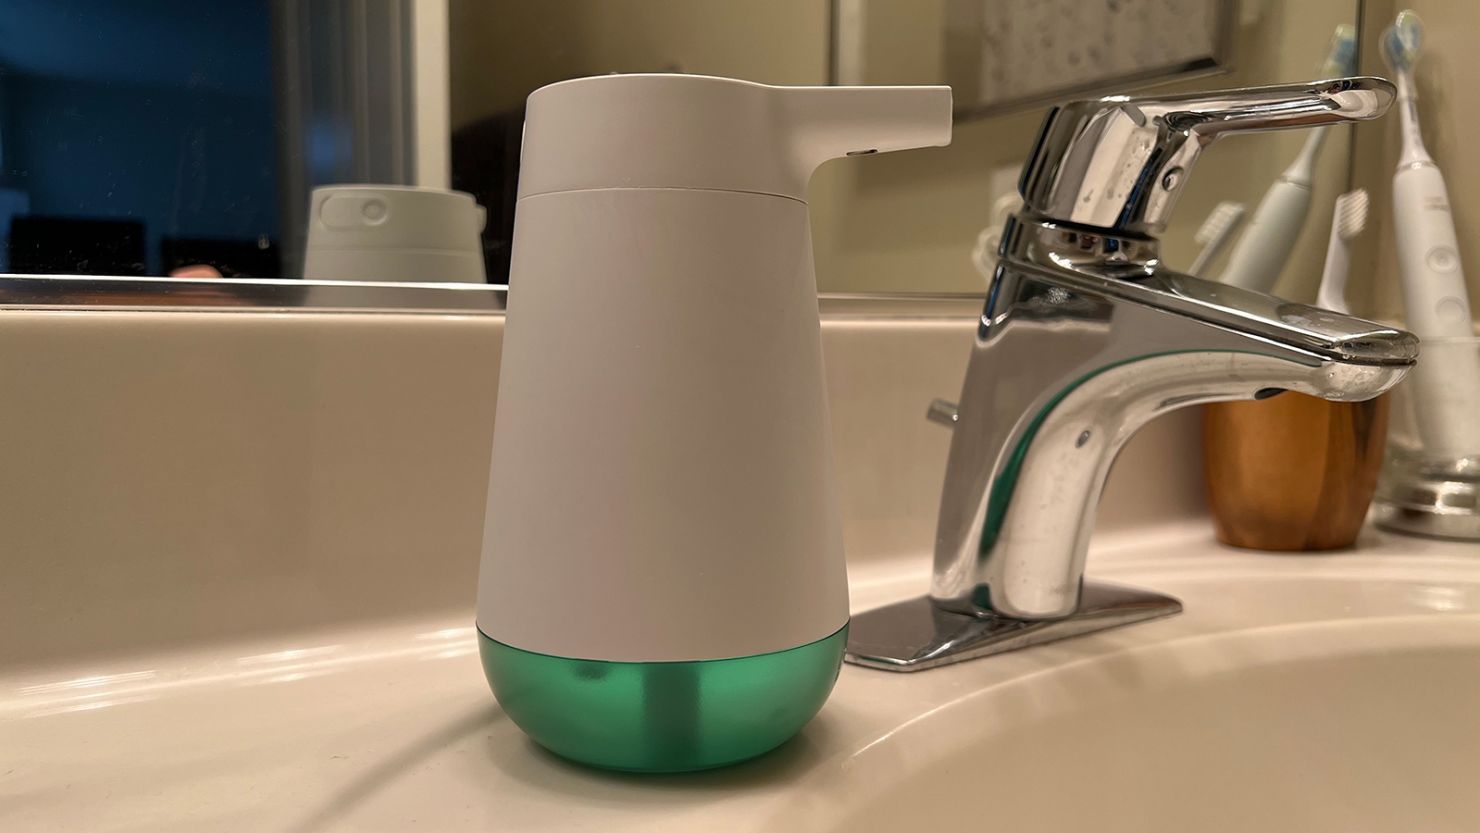 s new $55 Smart Soap Dispenser: We tried it